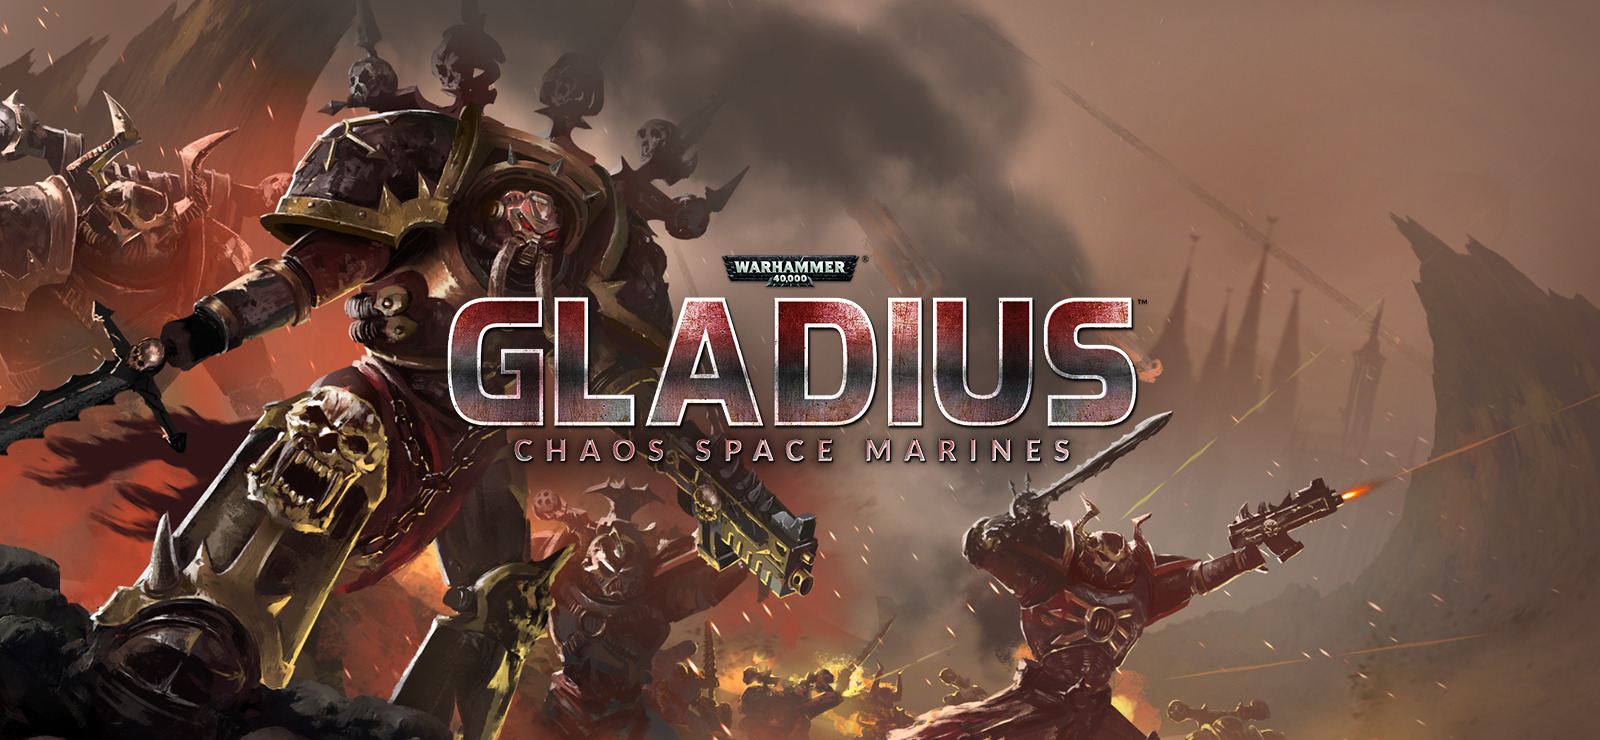 Warhammer 40,000: Gladius - Chaos Space Marines - Epic Games Store